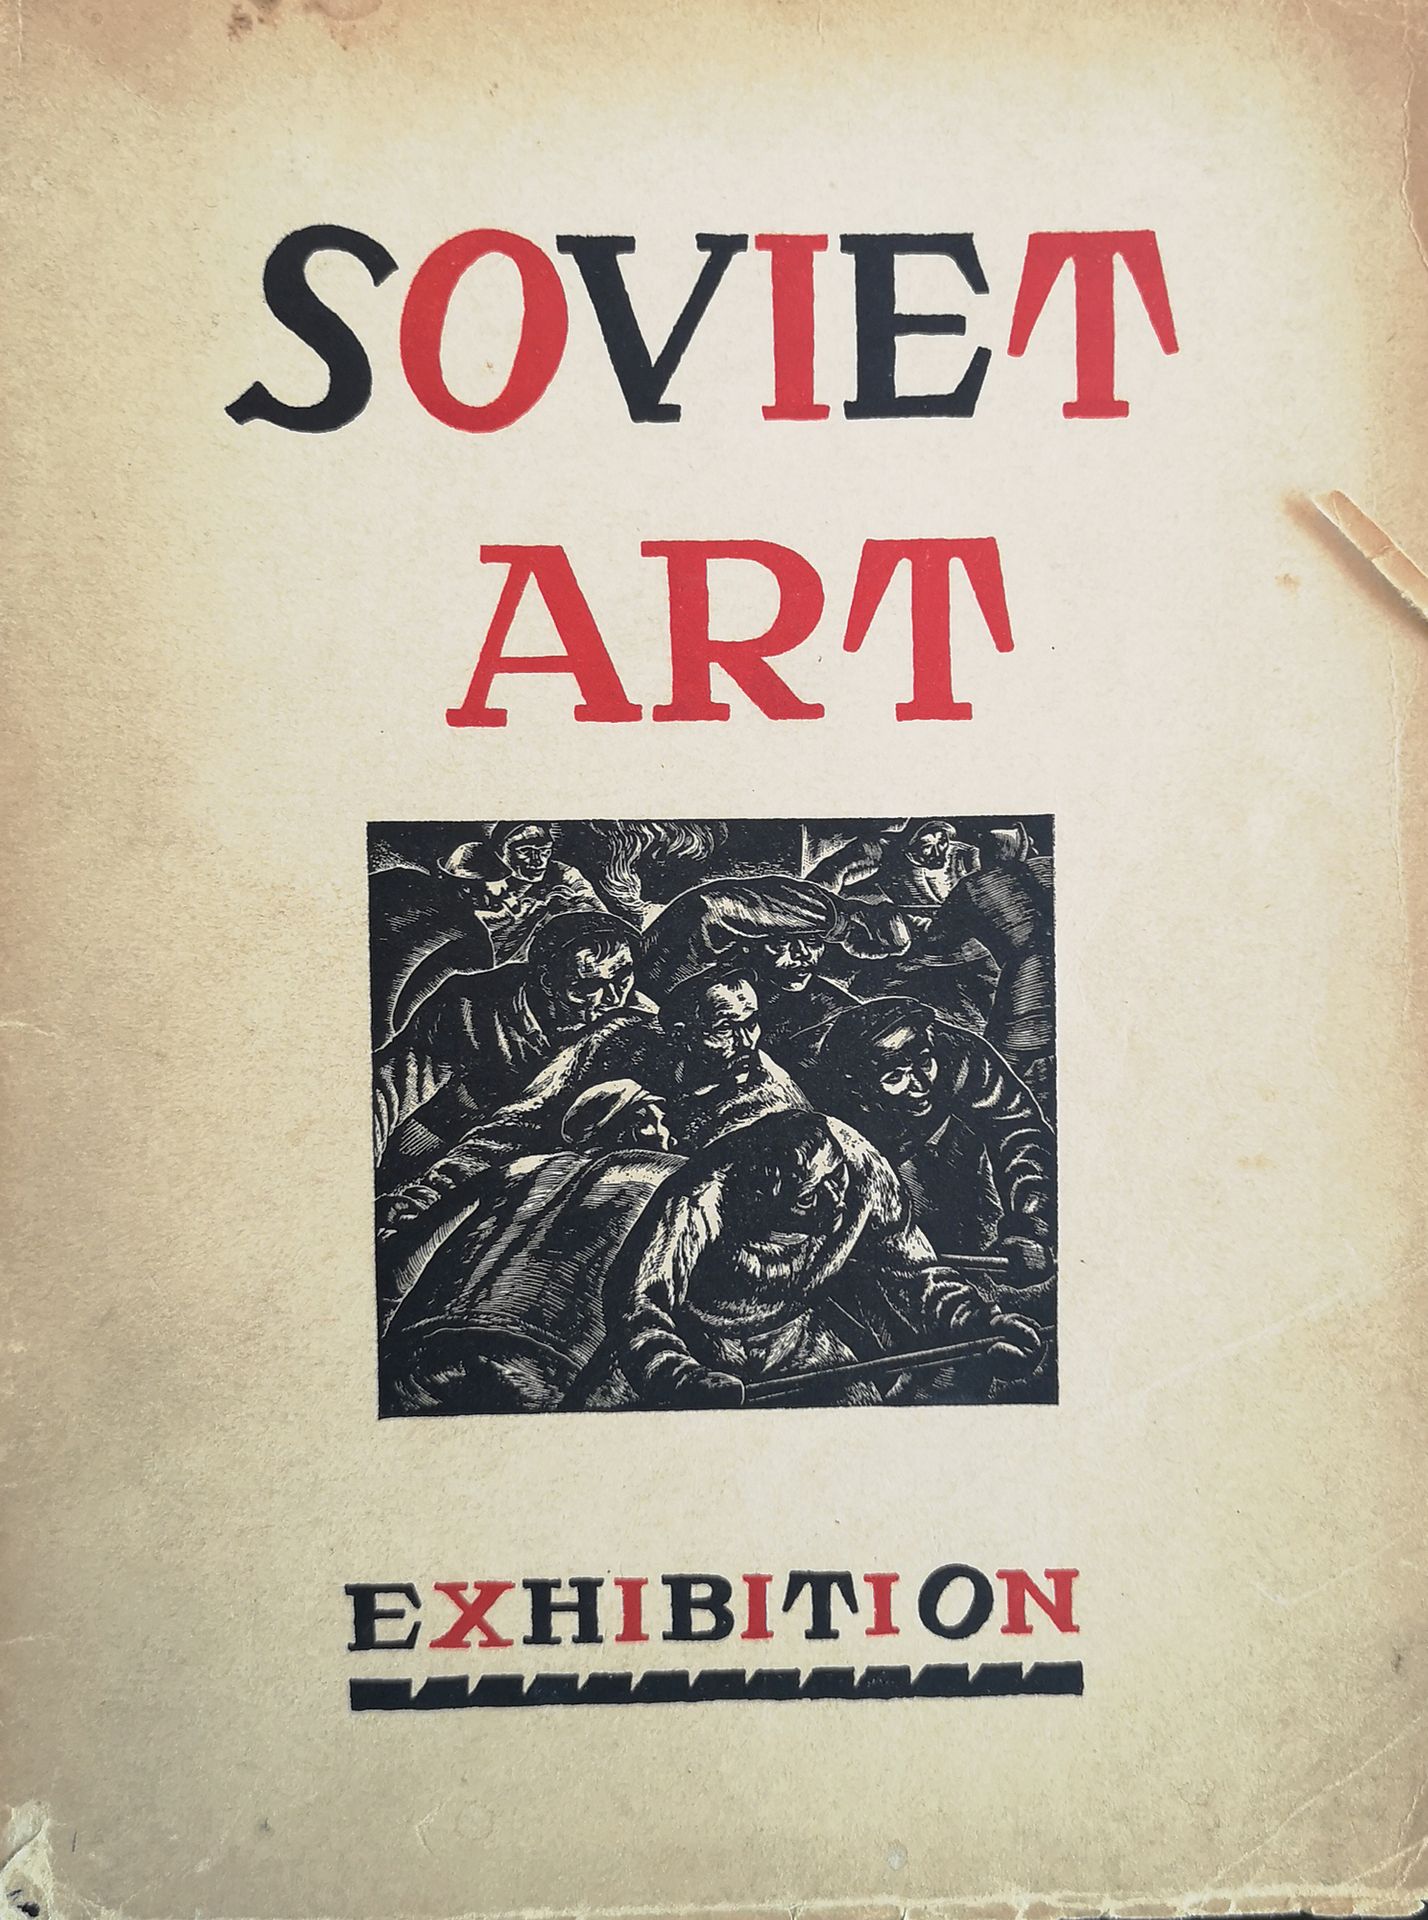 Null CATALOGUE OF THE EXHIBITION "SOVIET ART". 

By Fiske Kimball. Pennsylvania &hellip;